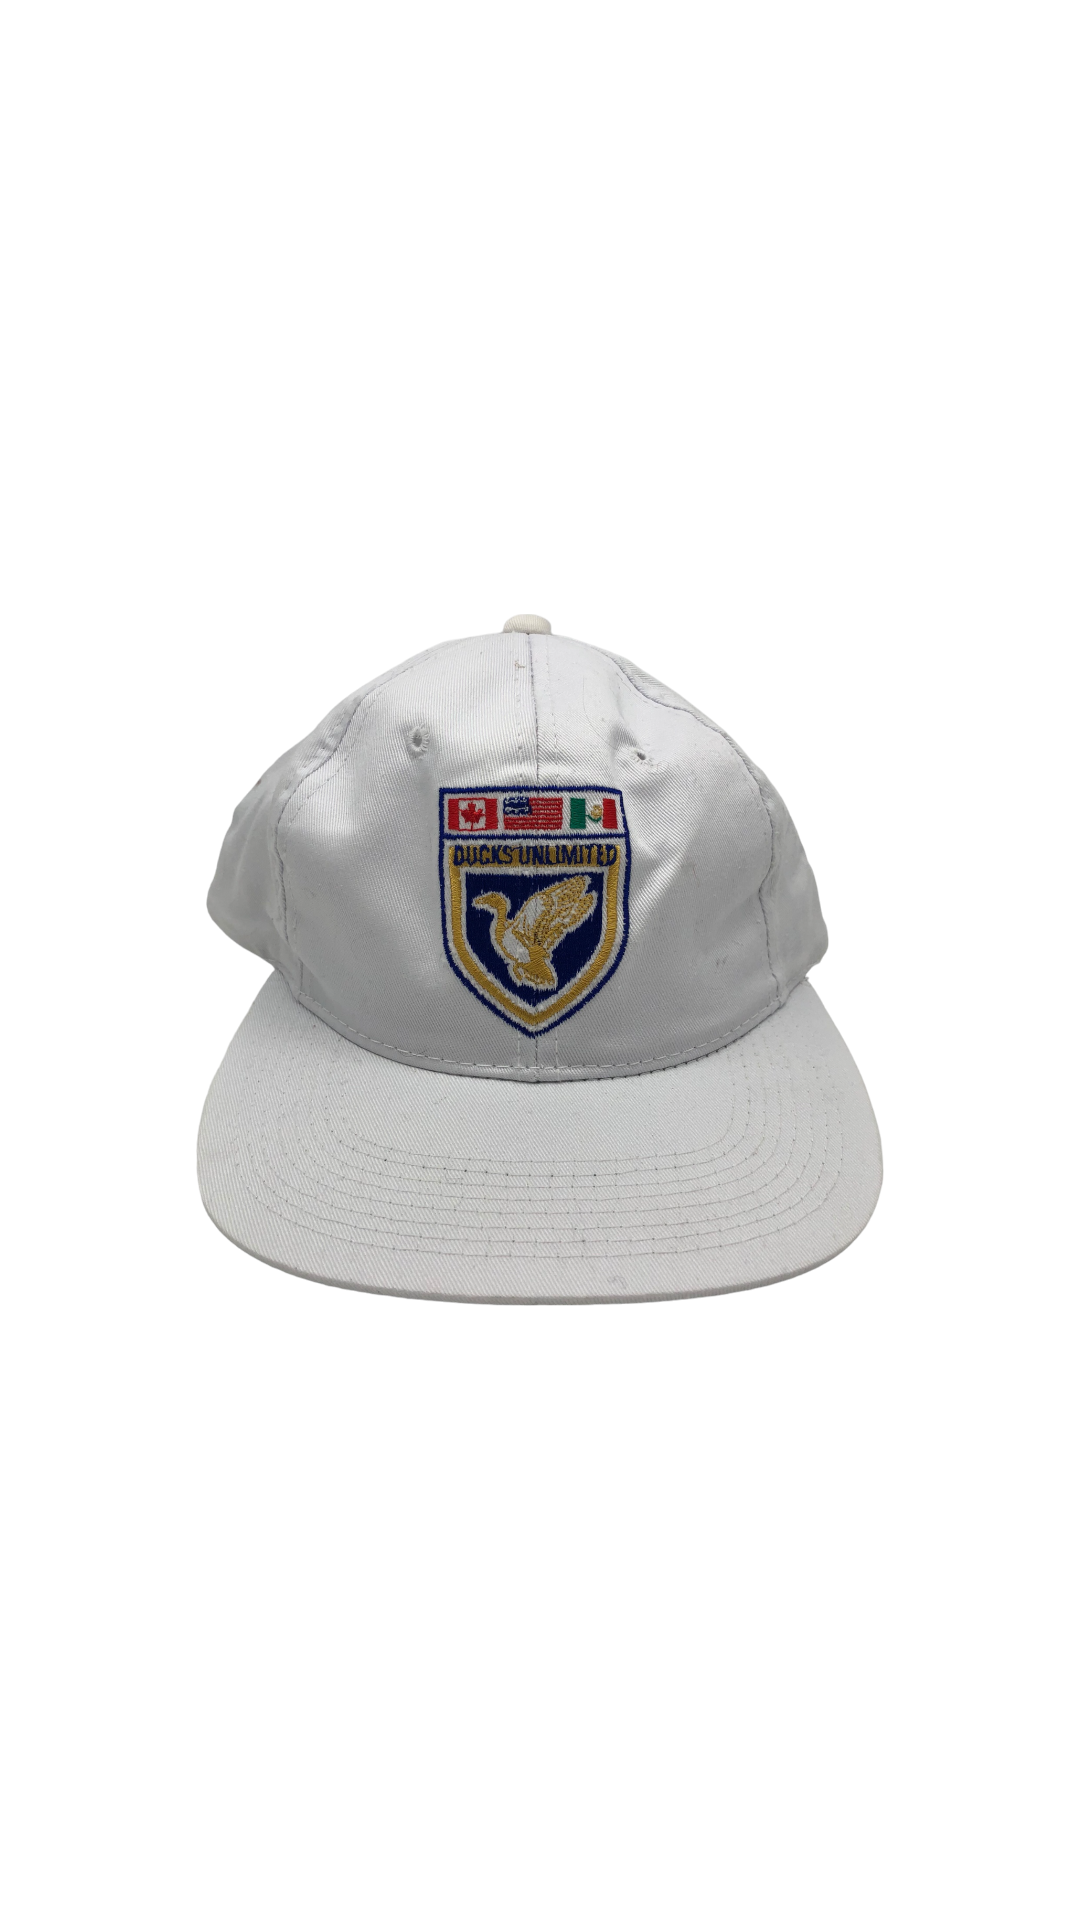 VTG Duck Unlimited White Shield Hat